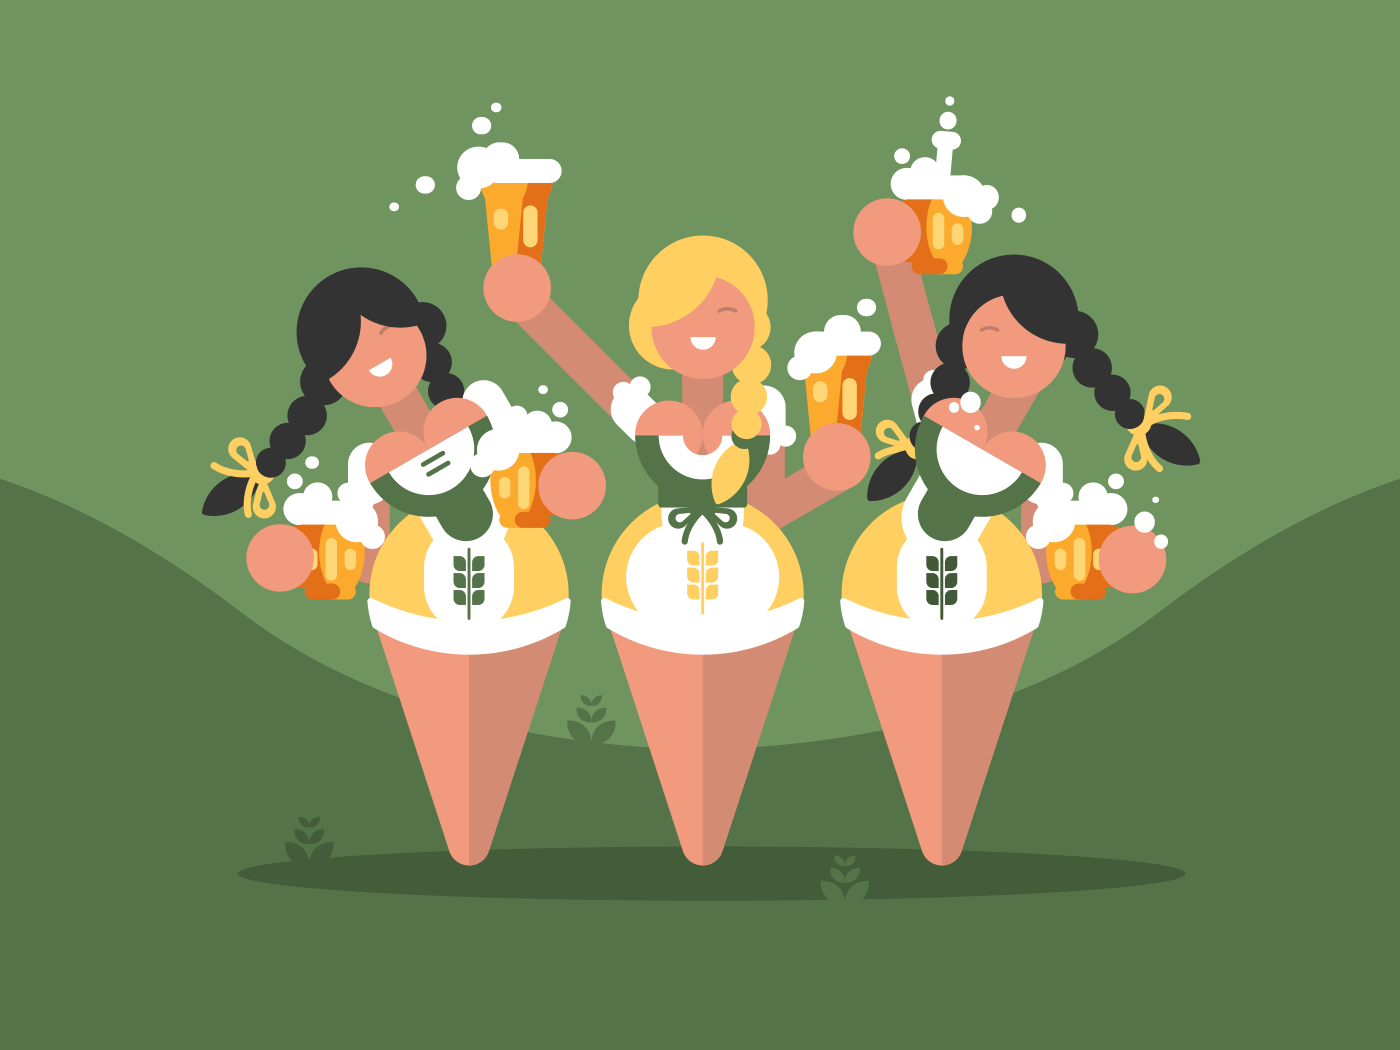 Oktoberfest beer festival illustration